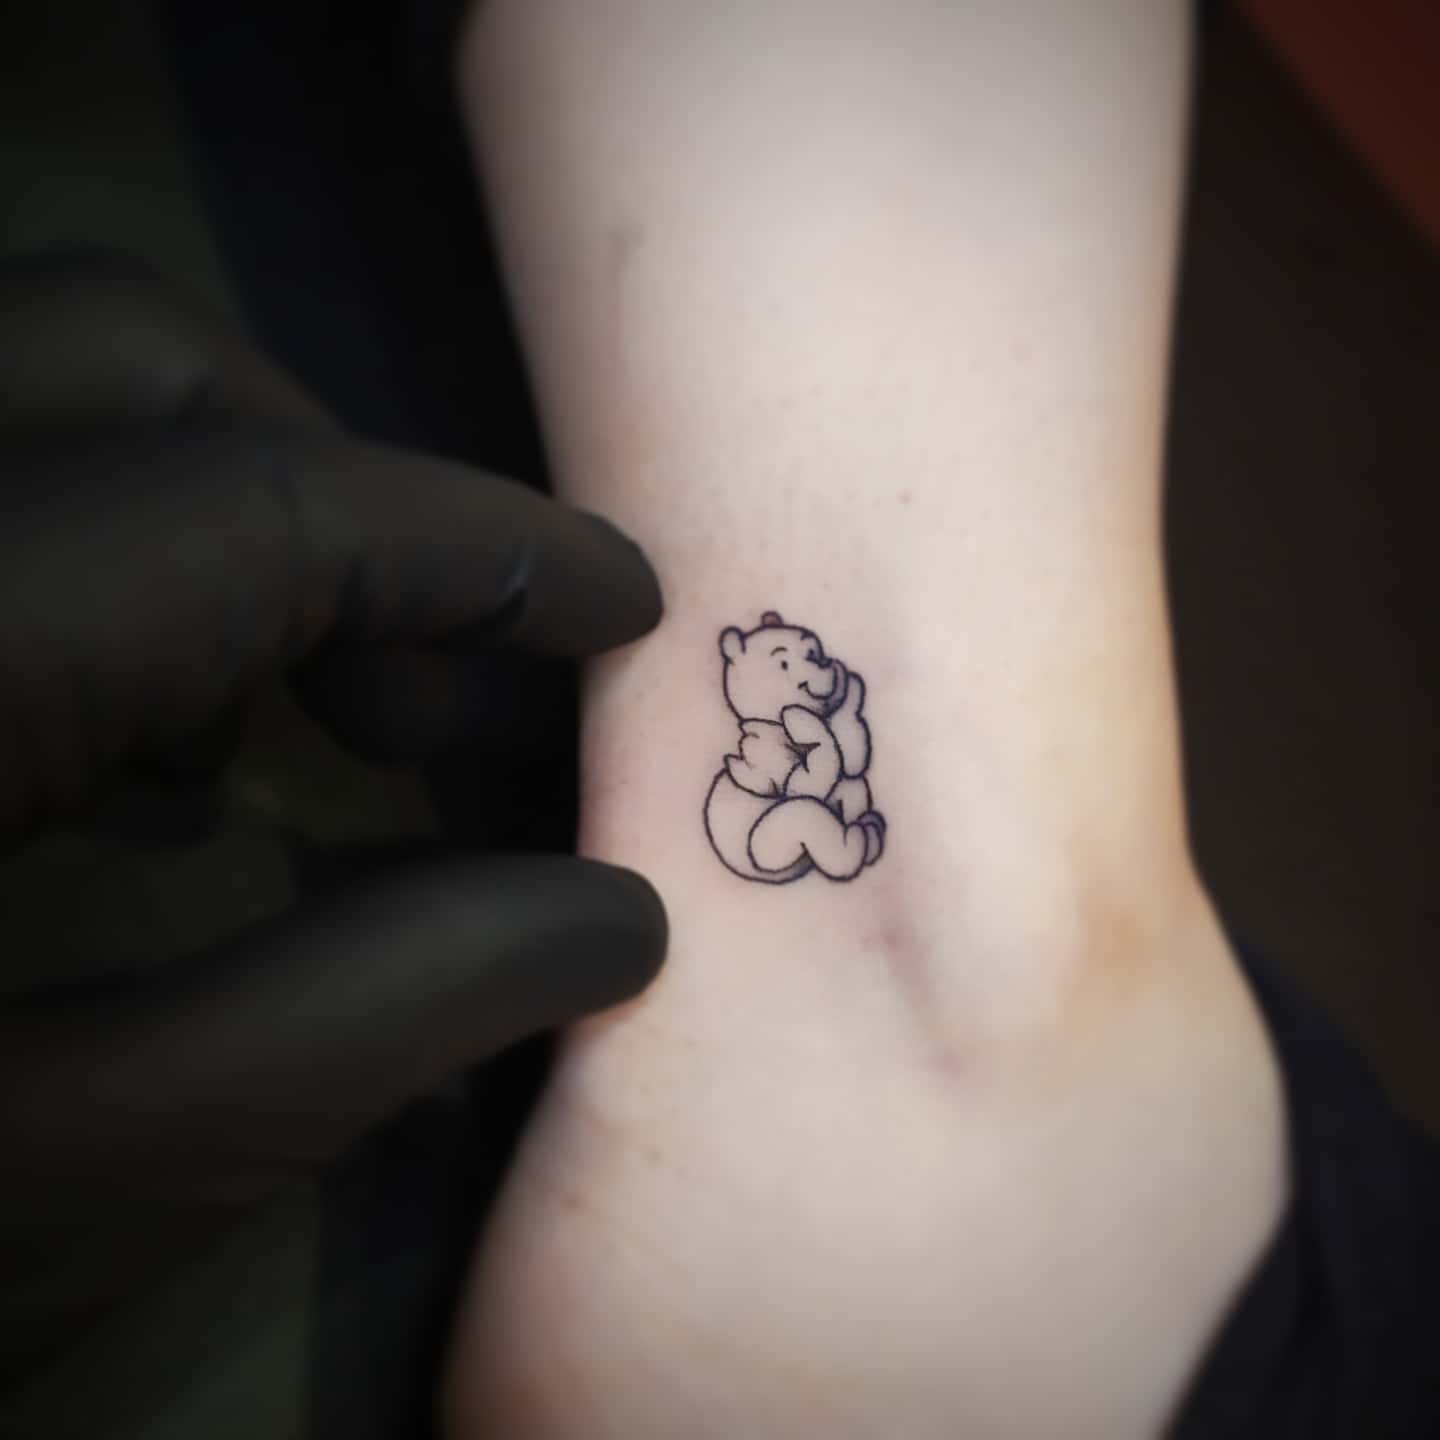 Tatuaje pequeño de Winnie the Pooh -michaelsugartattoo